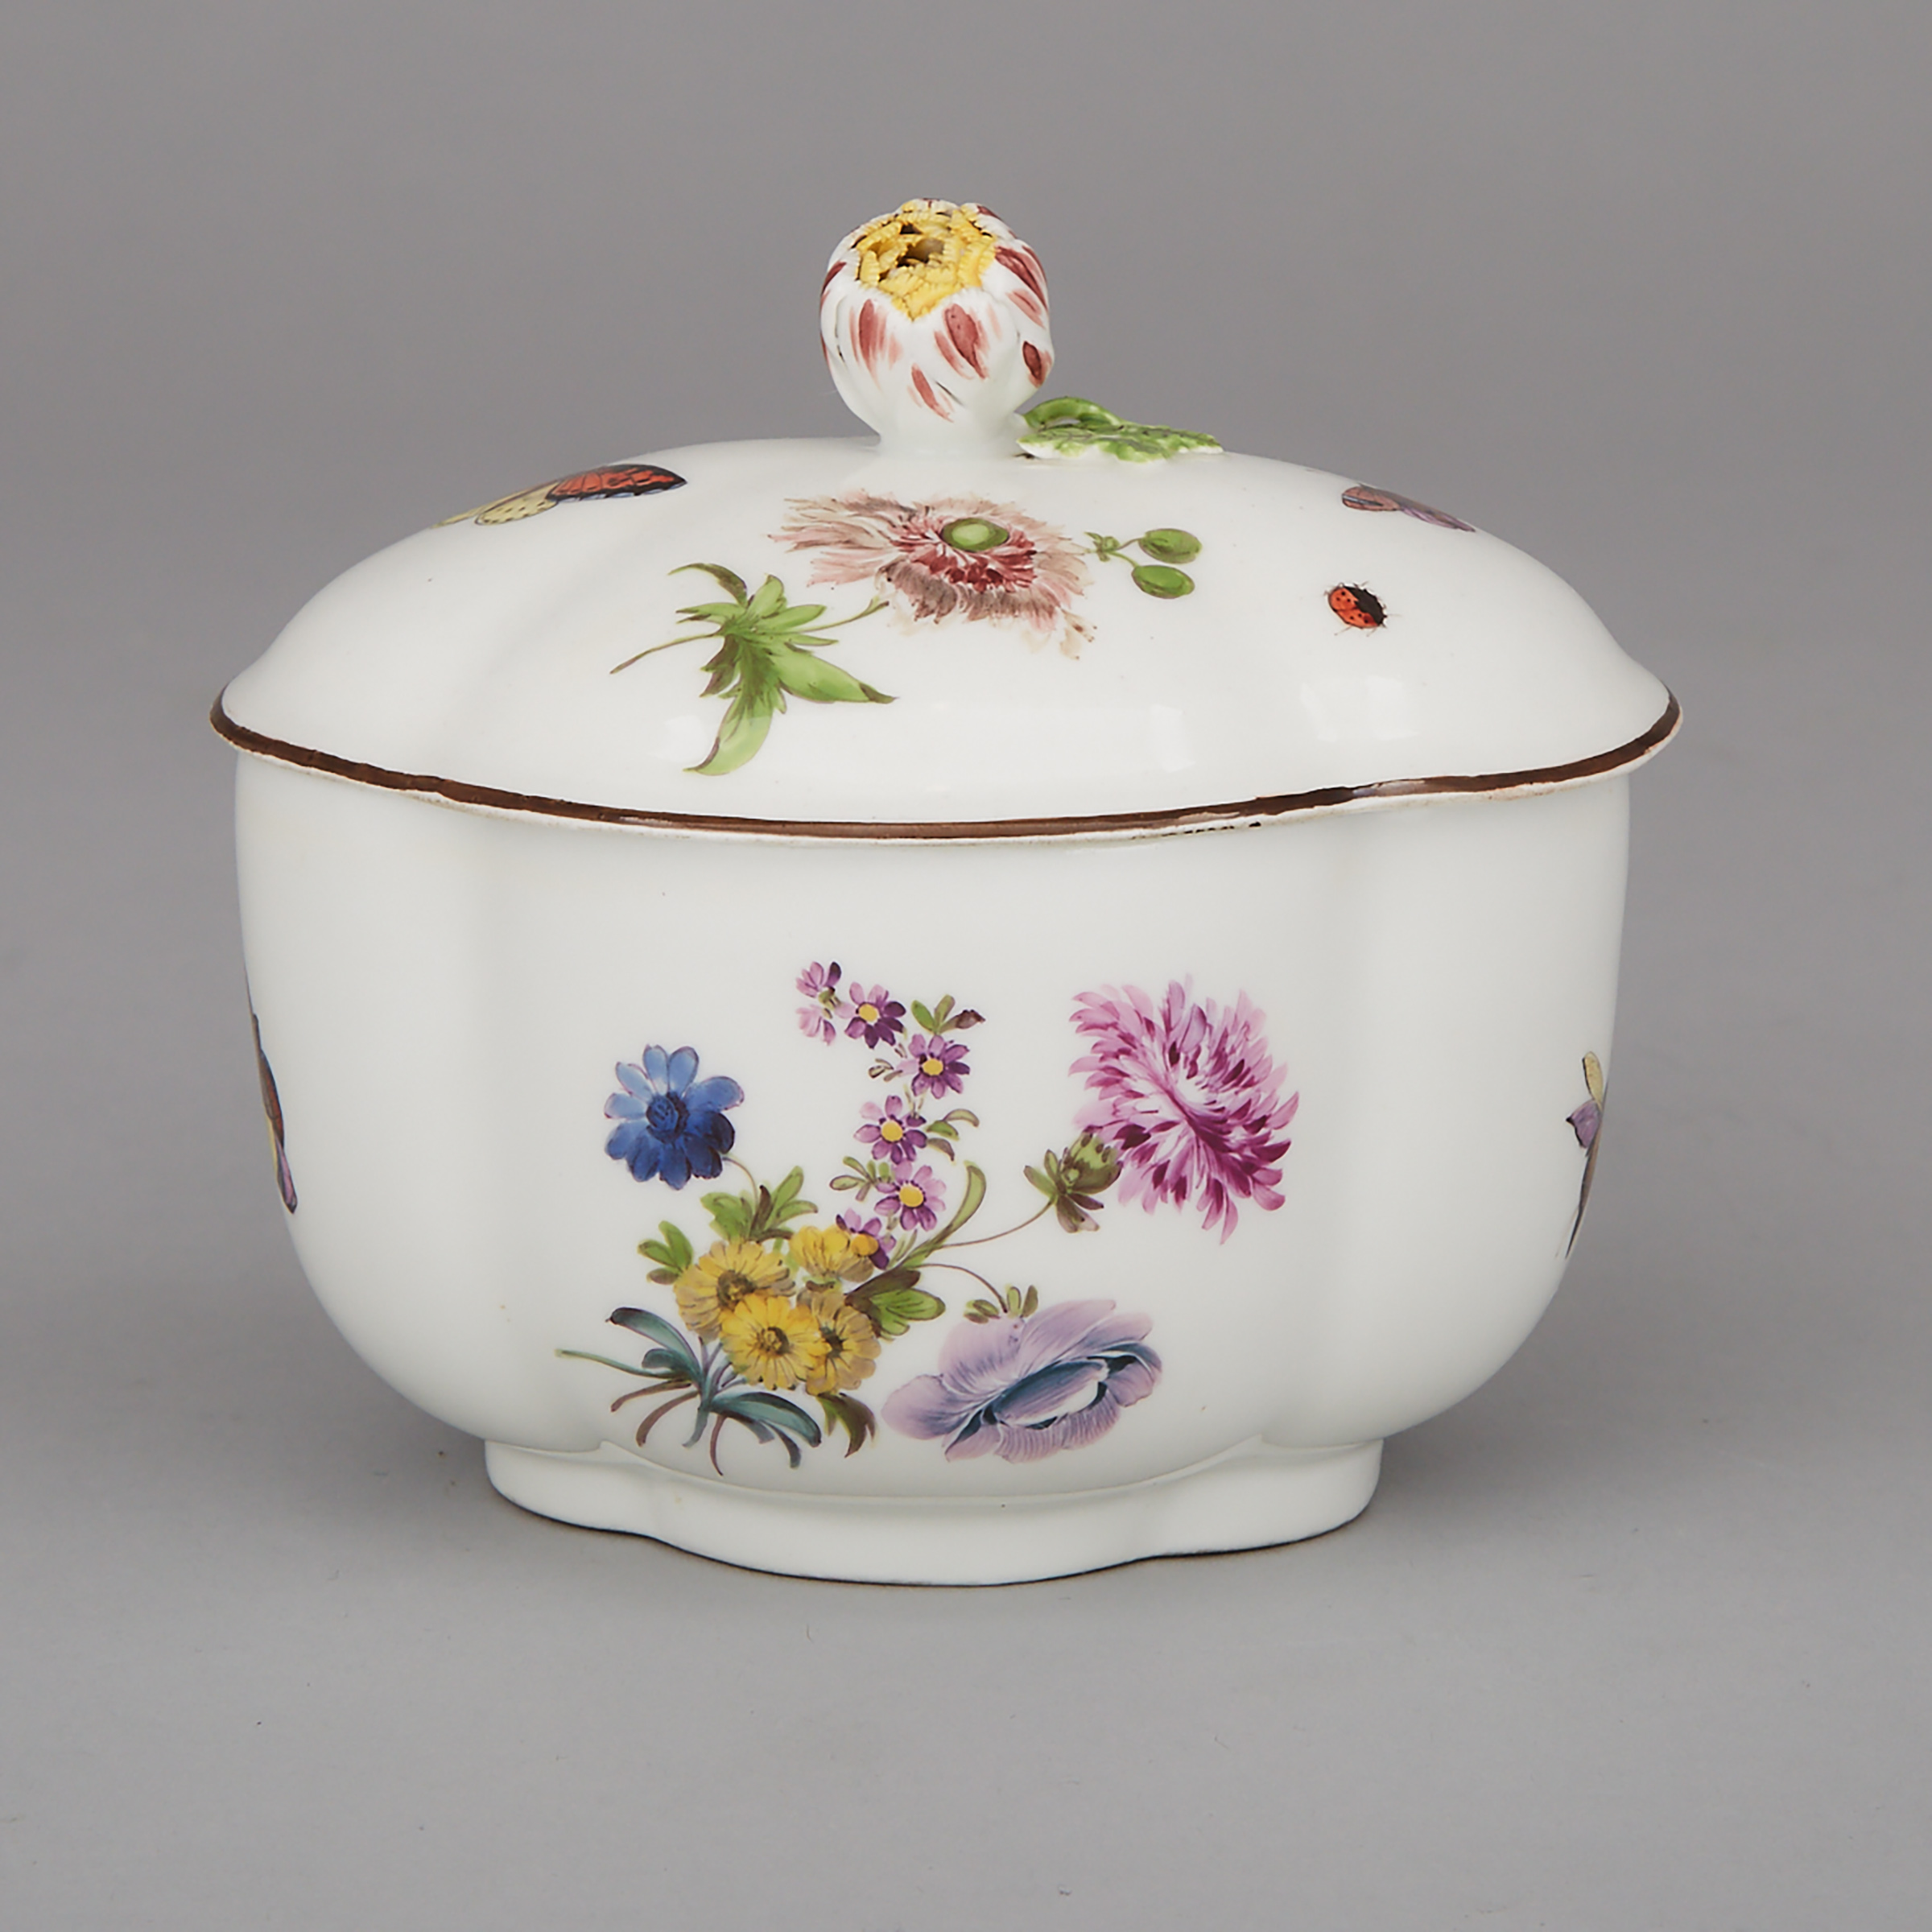 Meissen Covered Sugar Bowl, mid-18th century